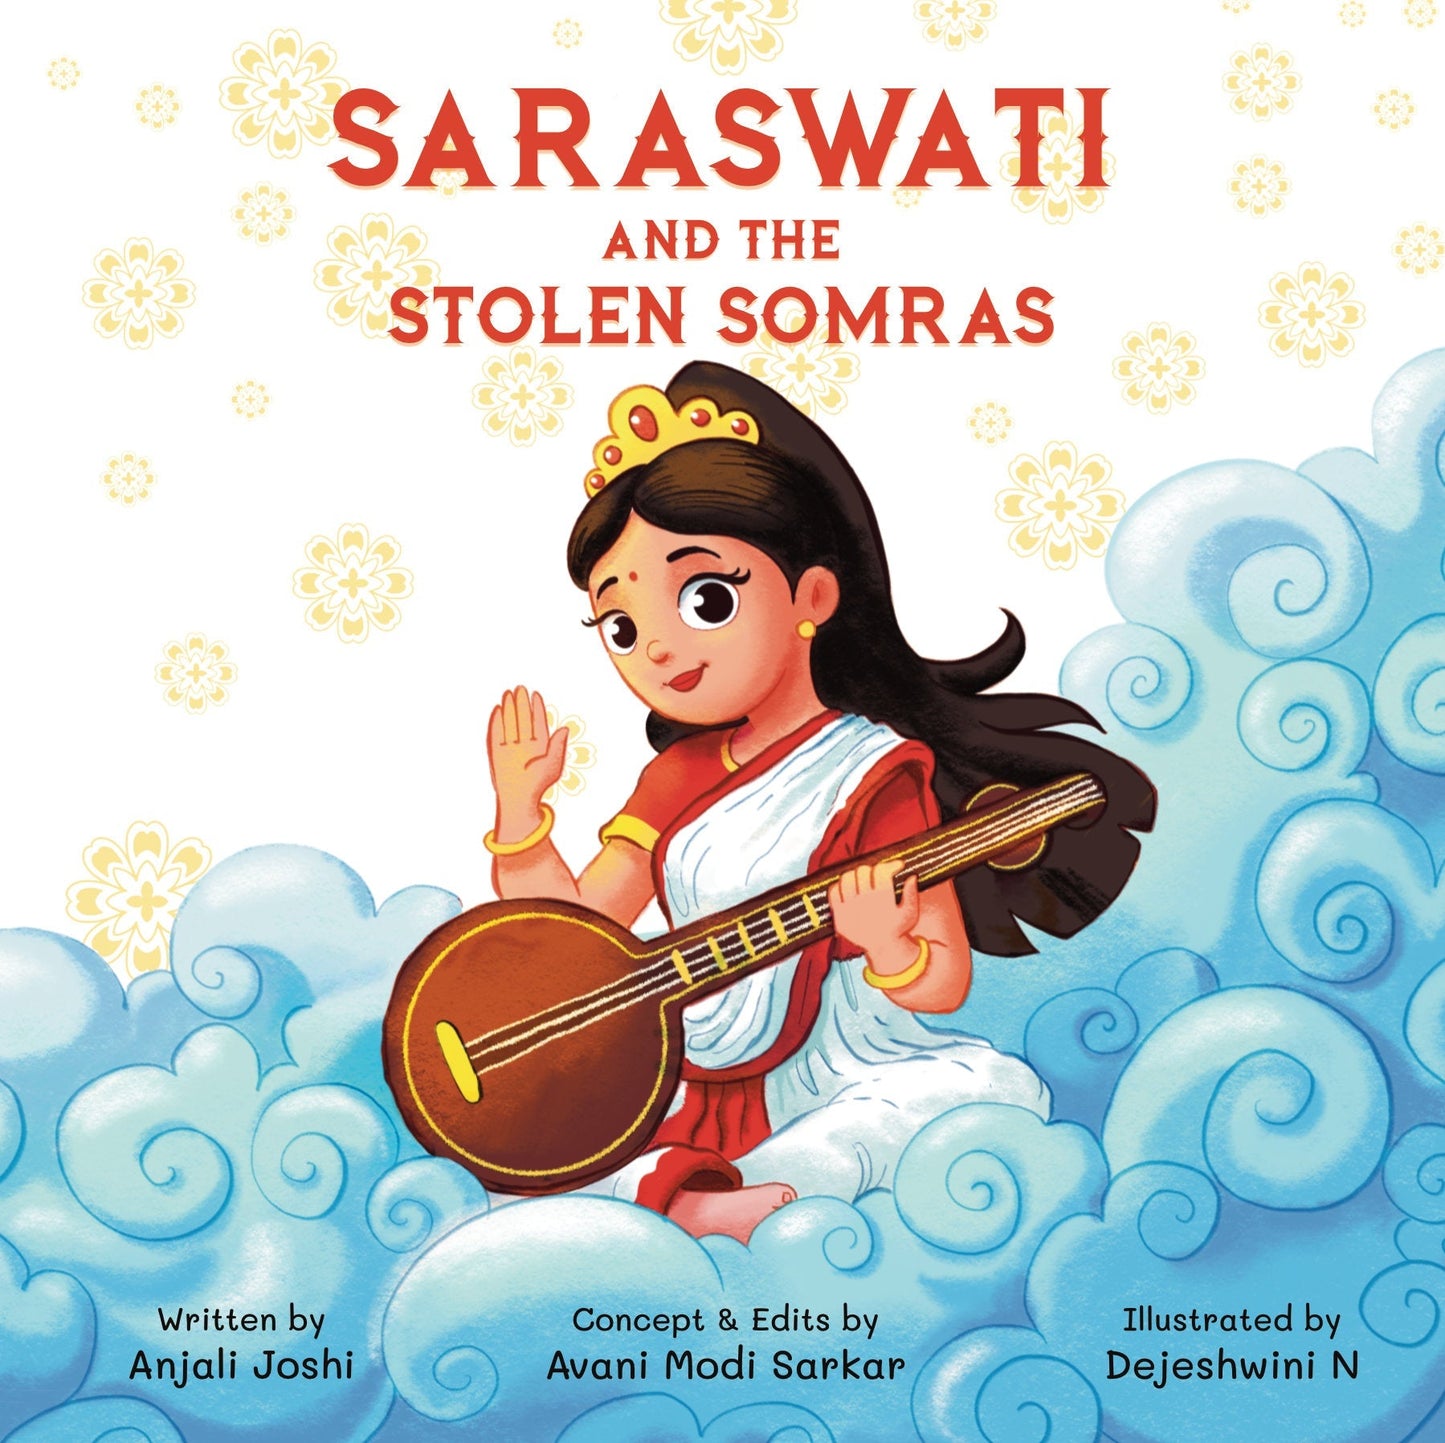 Book: Saraswati and the Stolen Somras